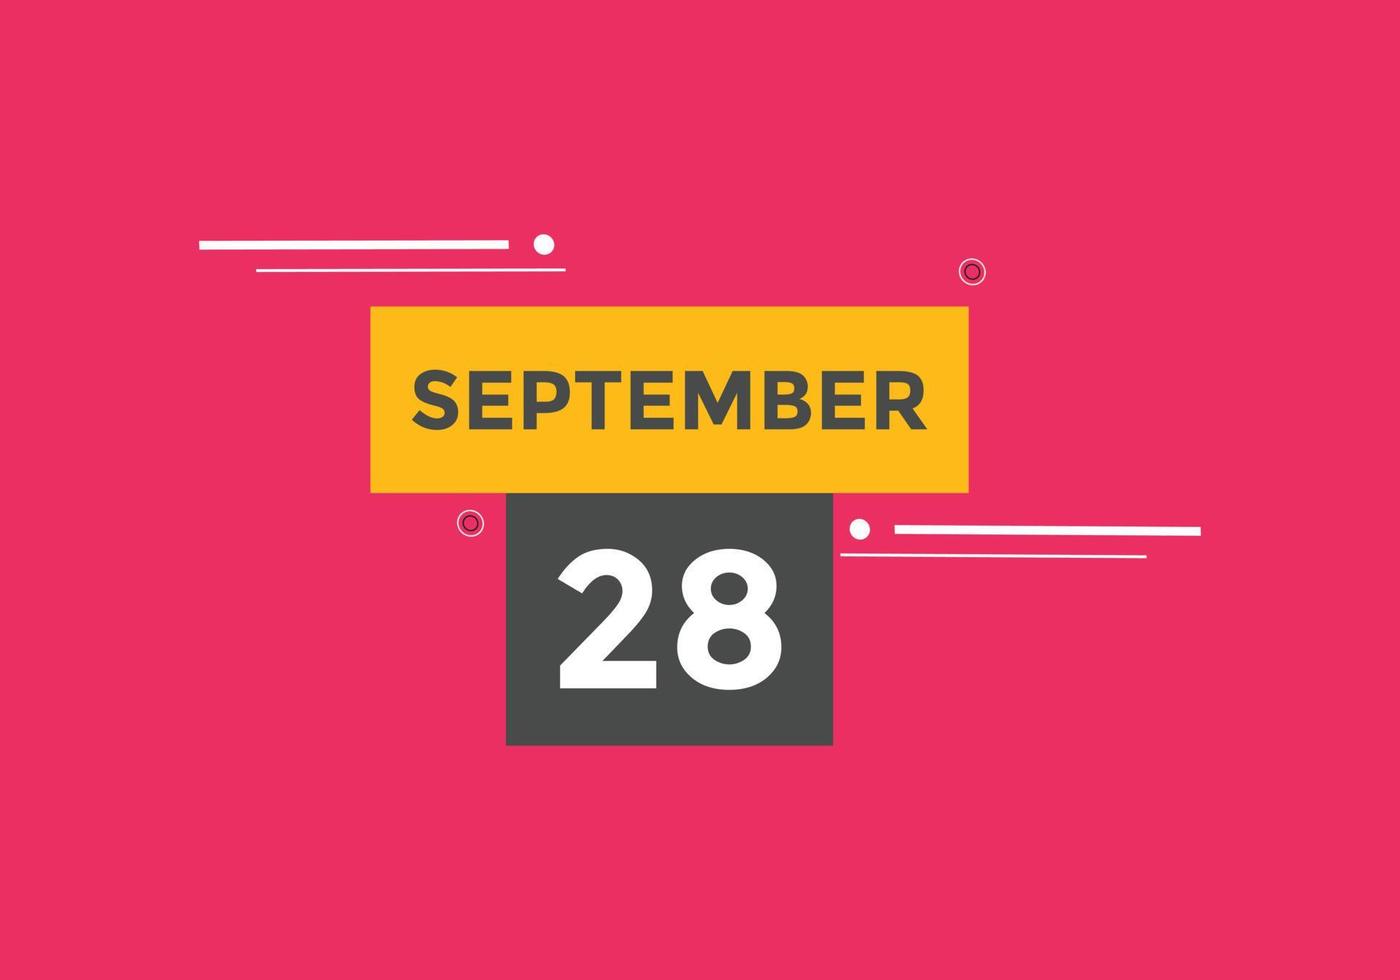 september 28 calendar reminder. 28th september daily calendar icon template. Calendar 28th september icon Design template. Vector illustration